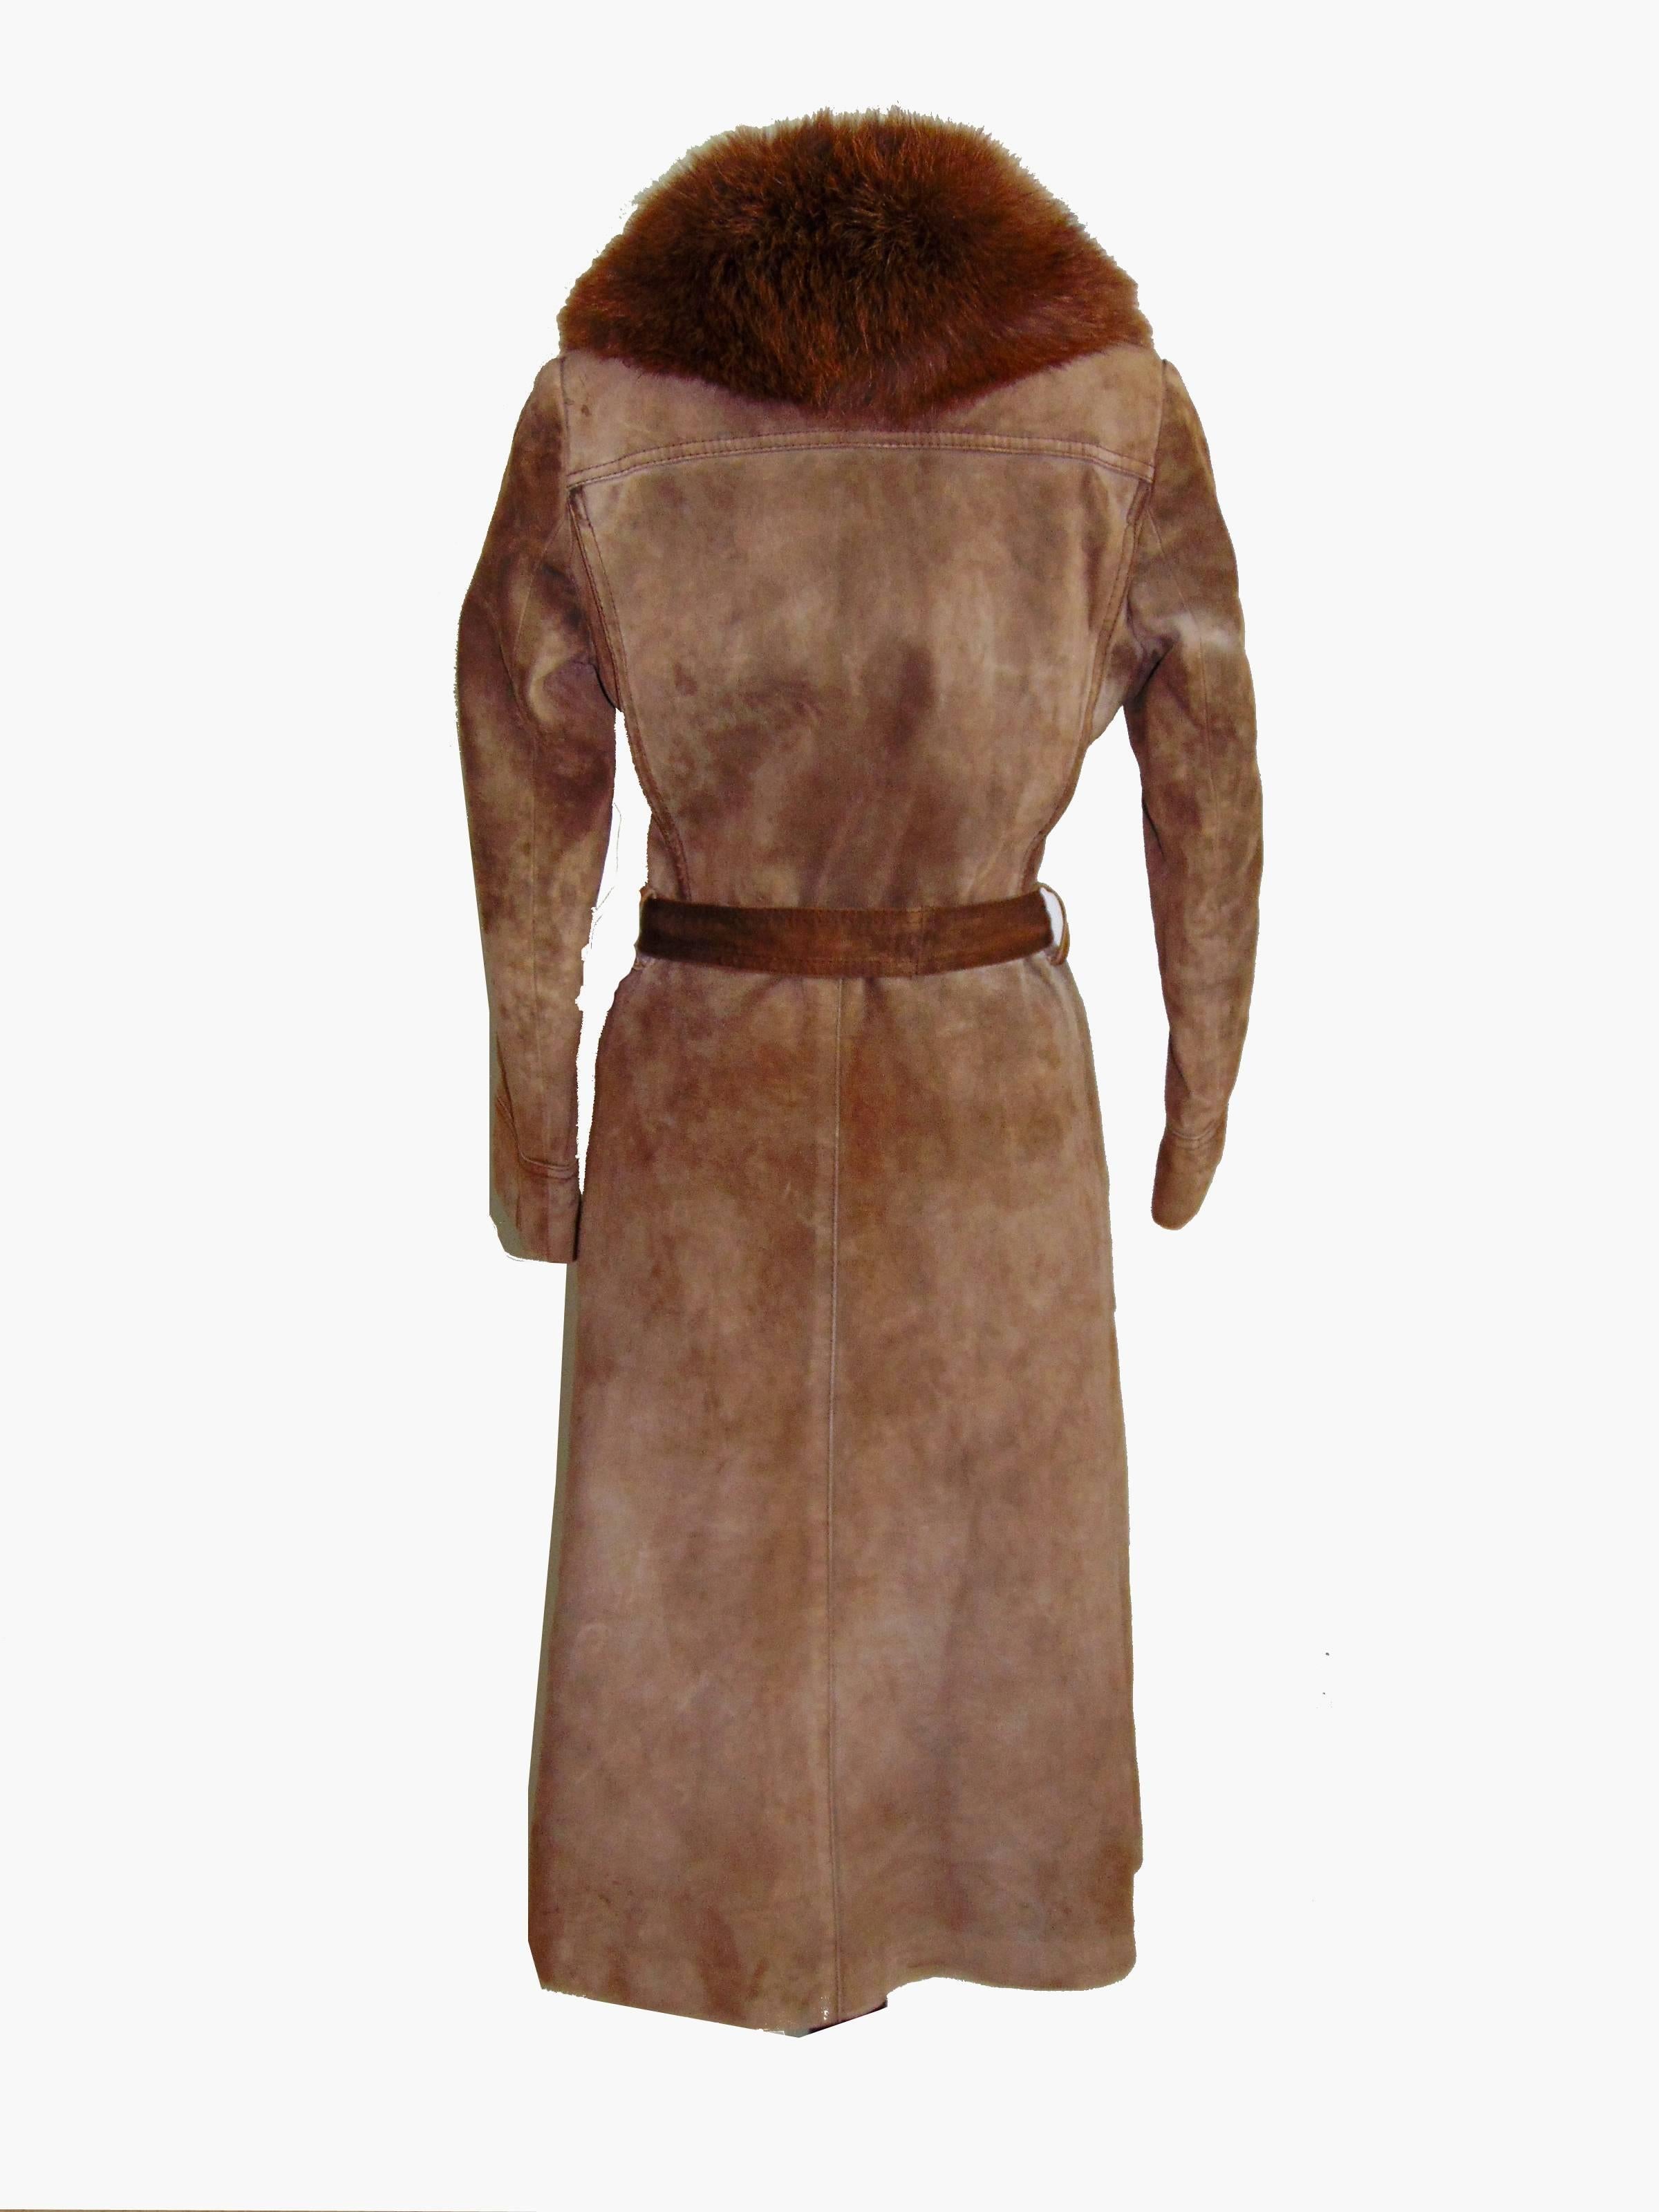 vintage suede coat with fur collar